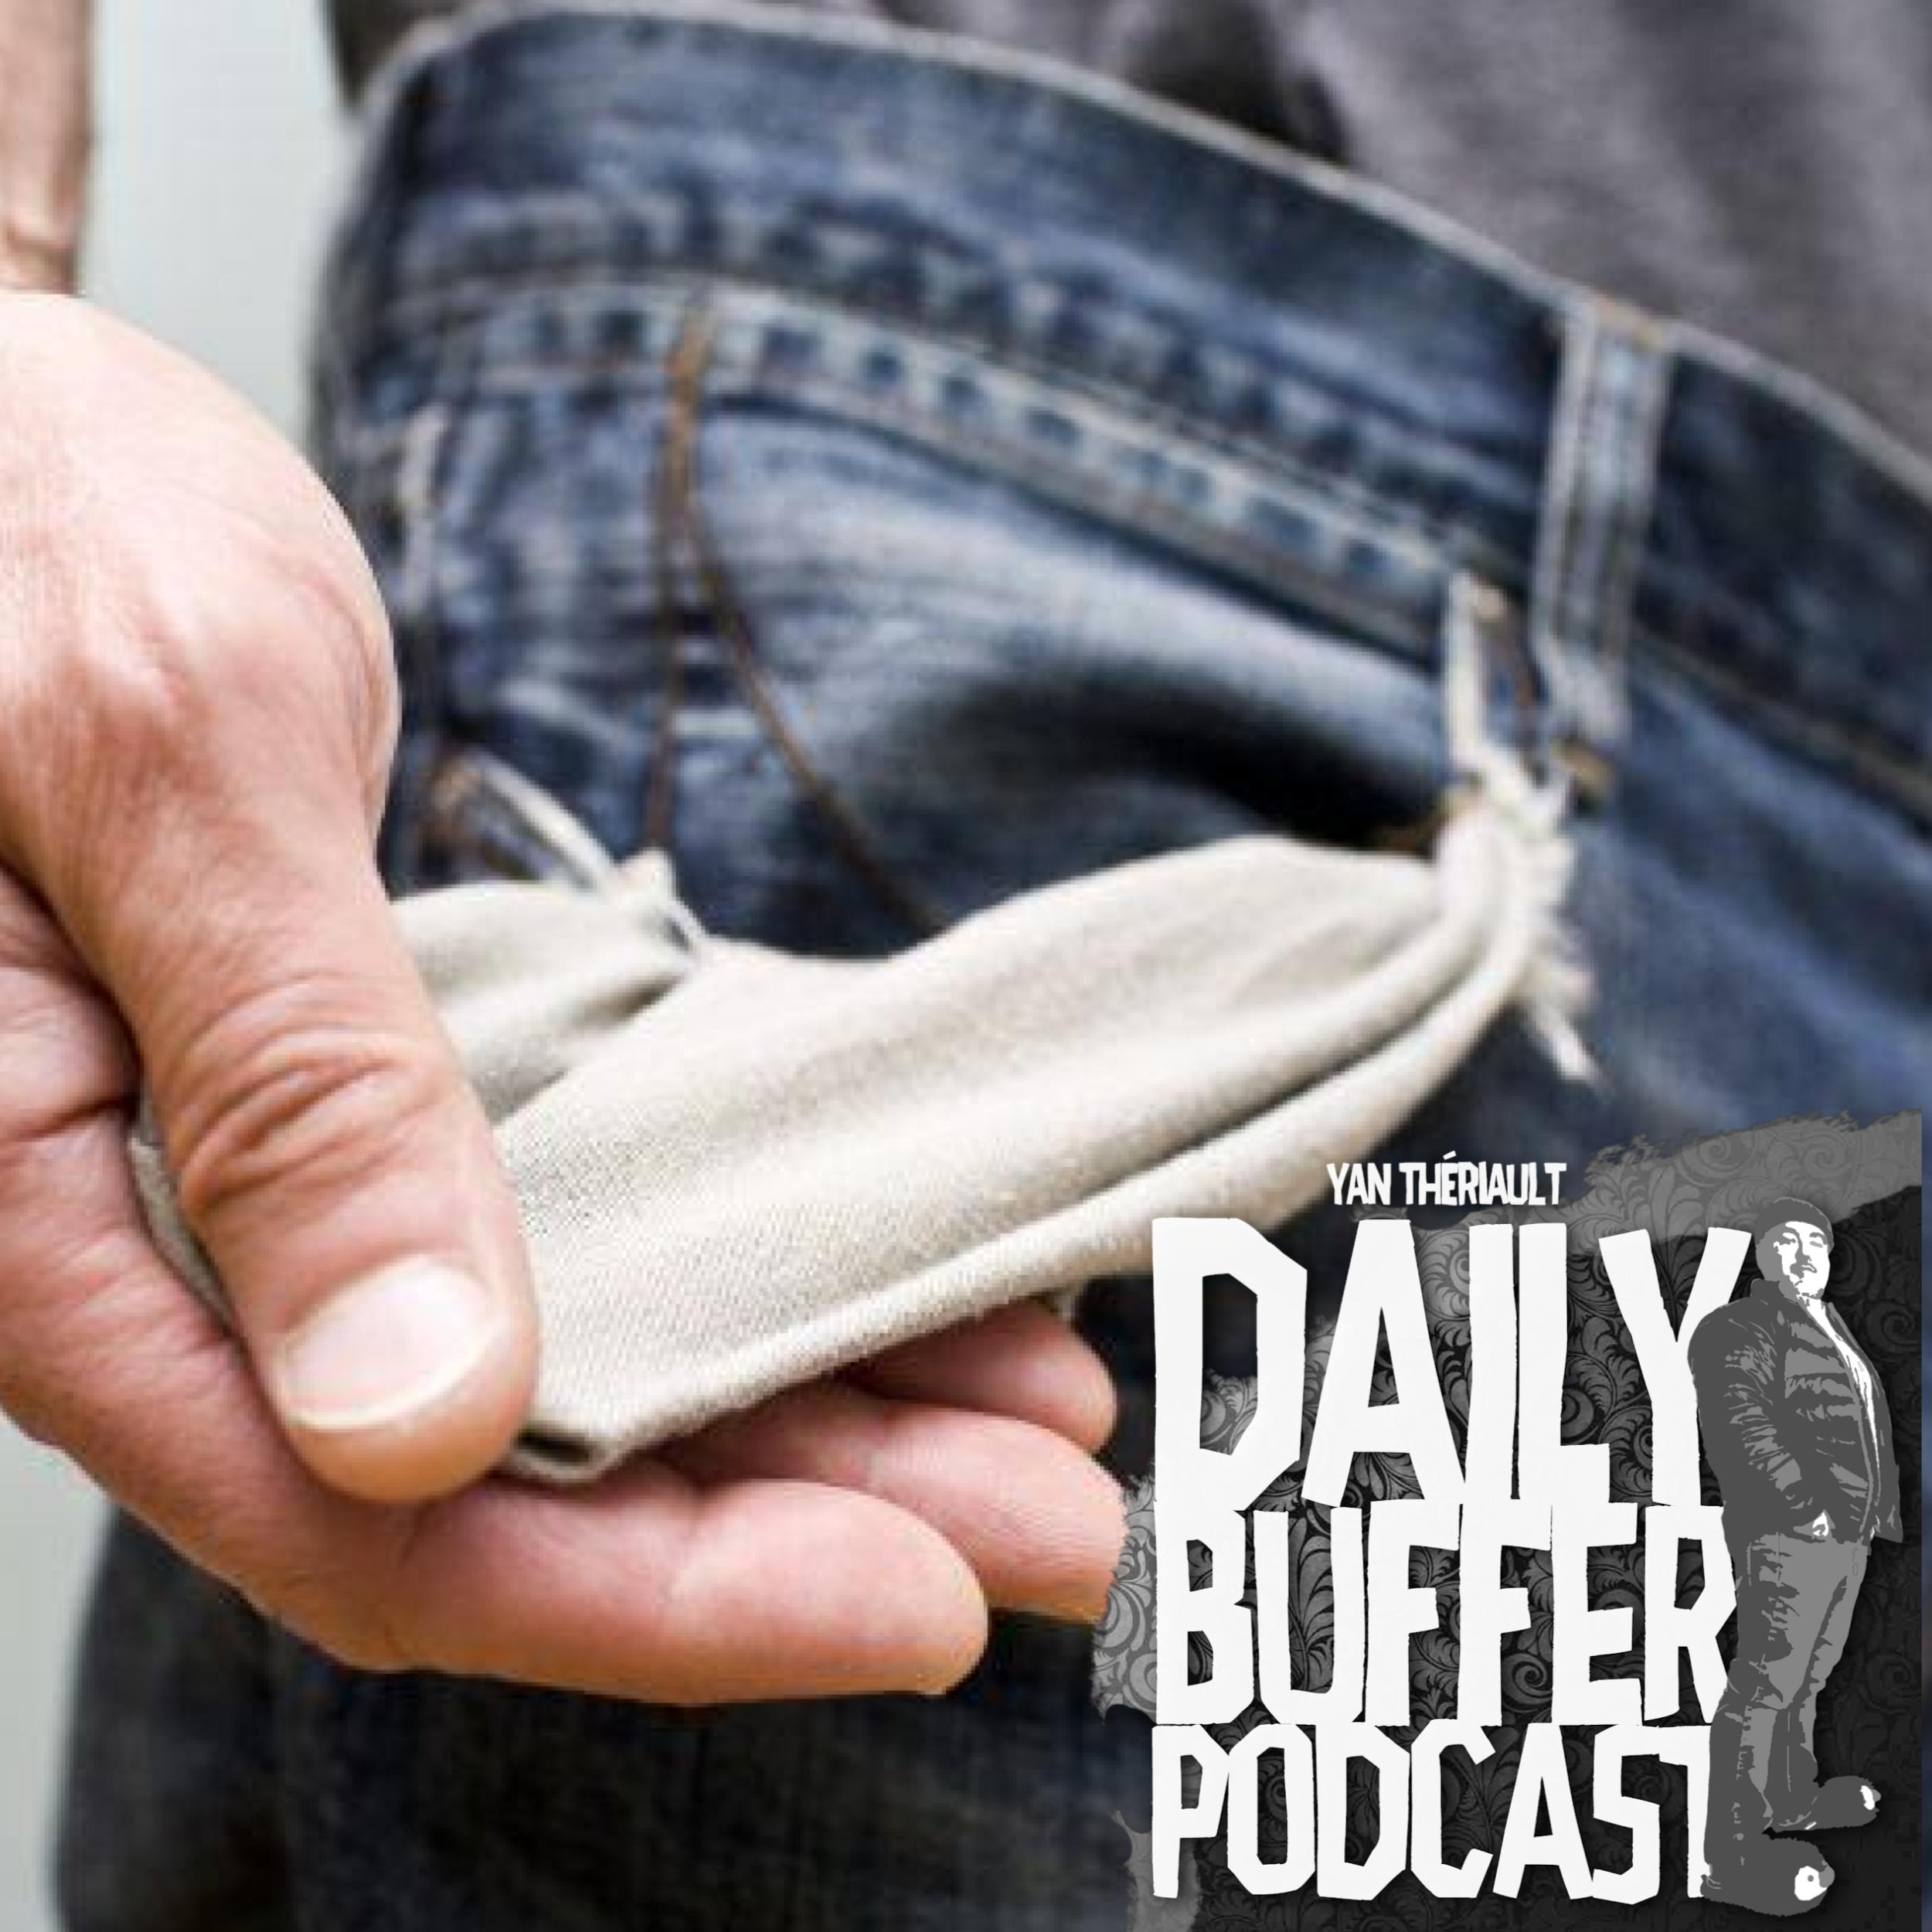 Le Daily Buffer Podcast - 2019 03 19 - Mauvais choix